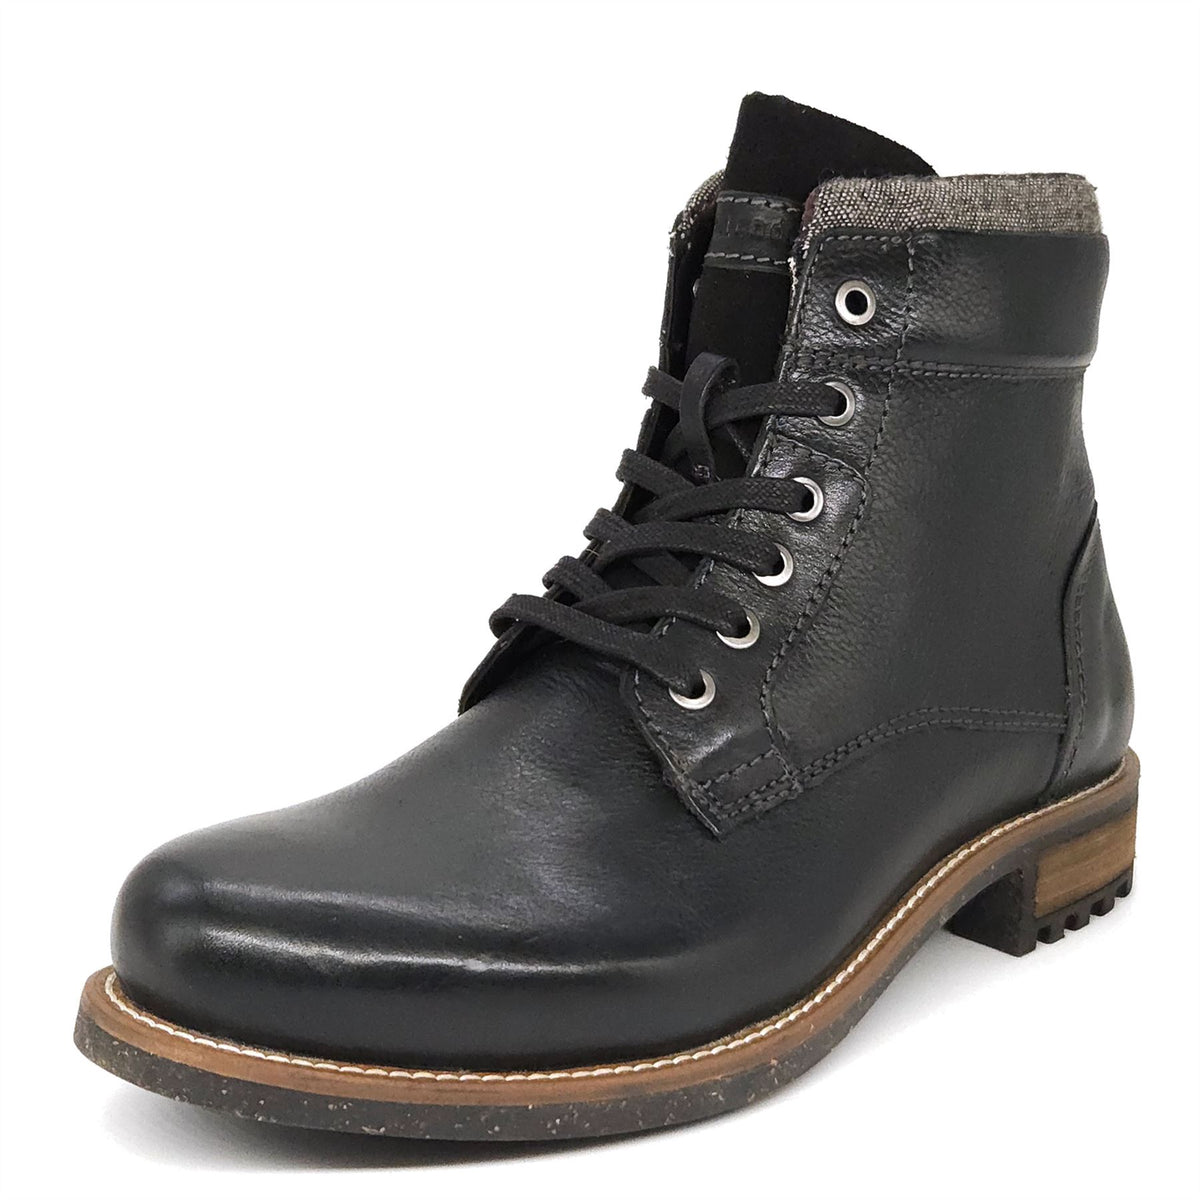 HX London Hounslow Lace Up Leather Boots